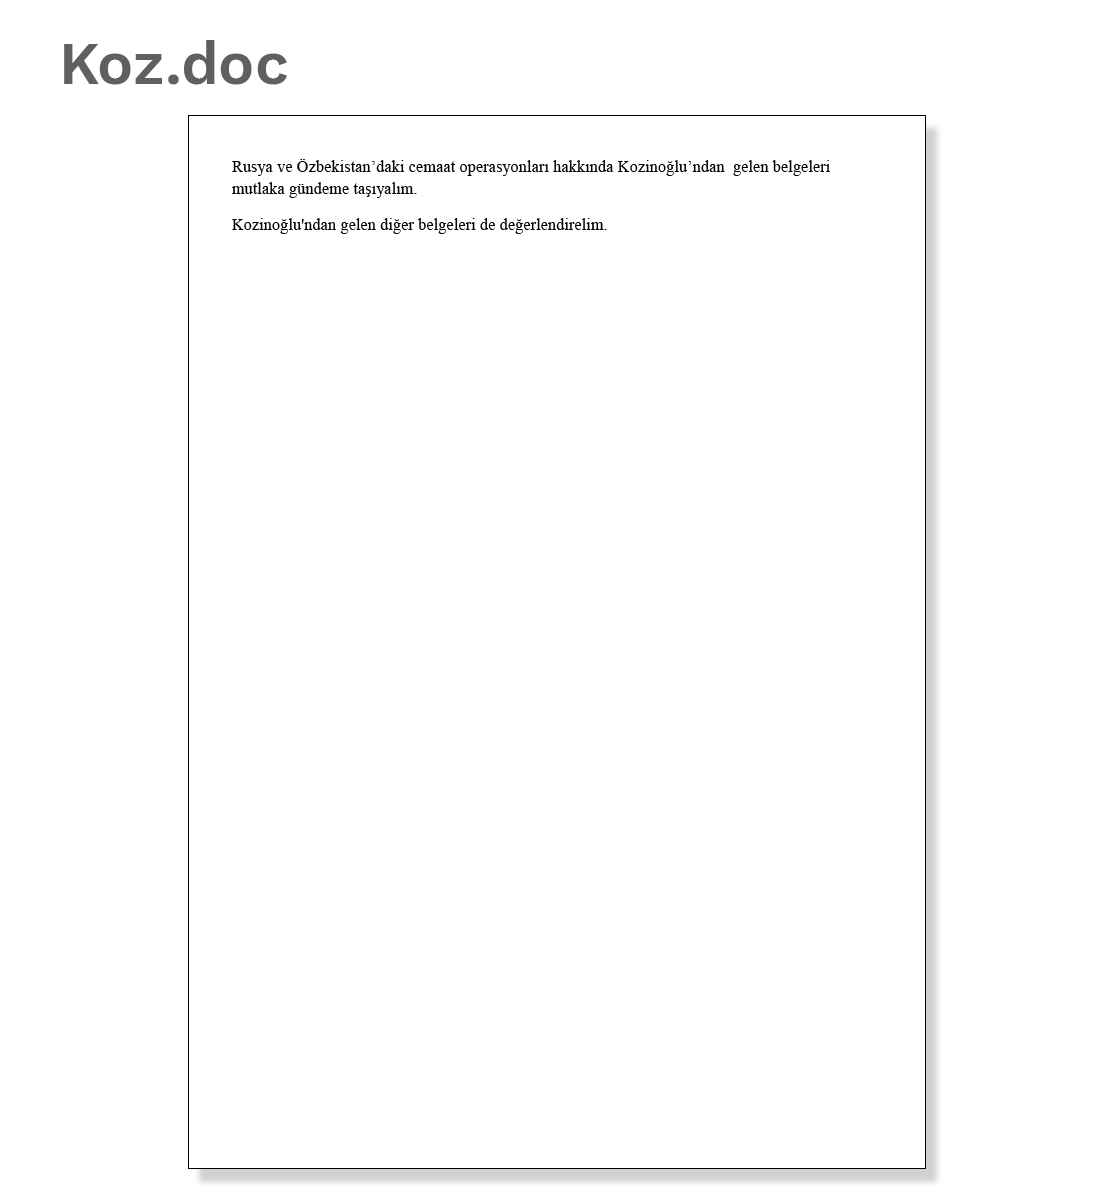 Document 3: Koz.doc